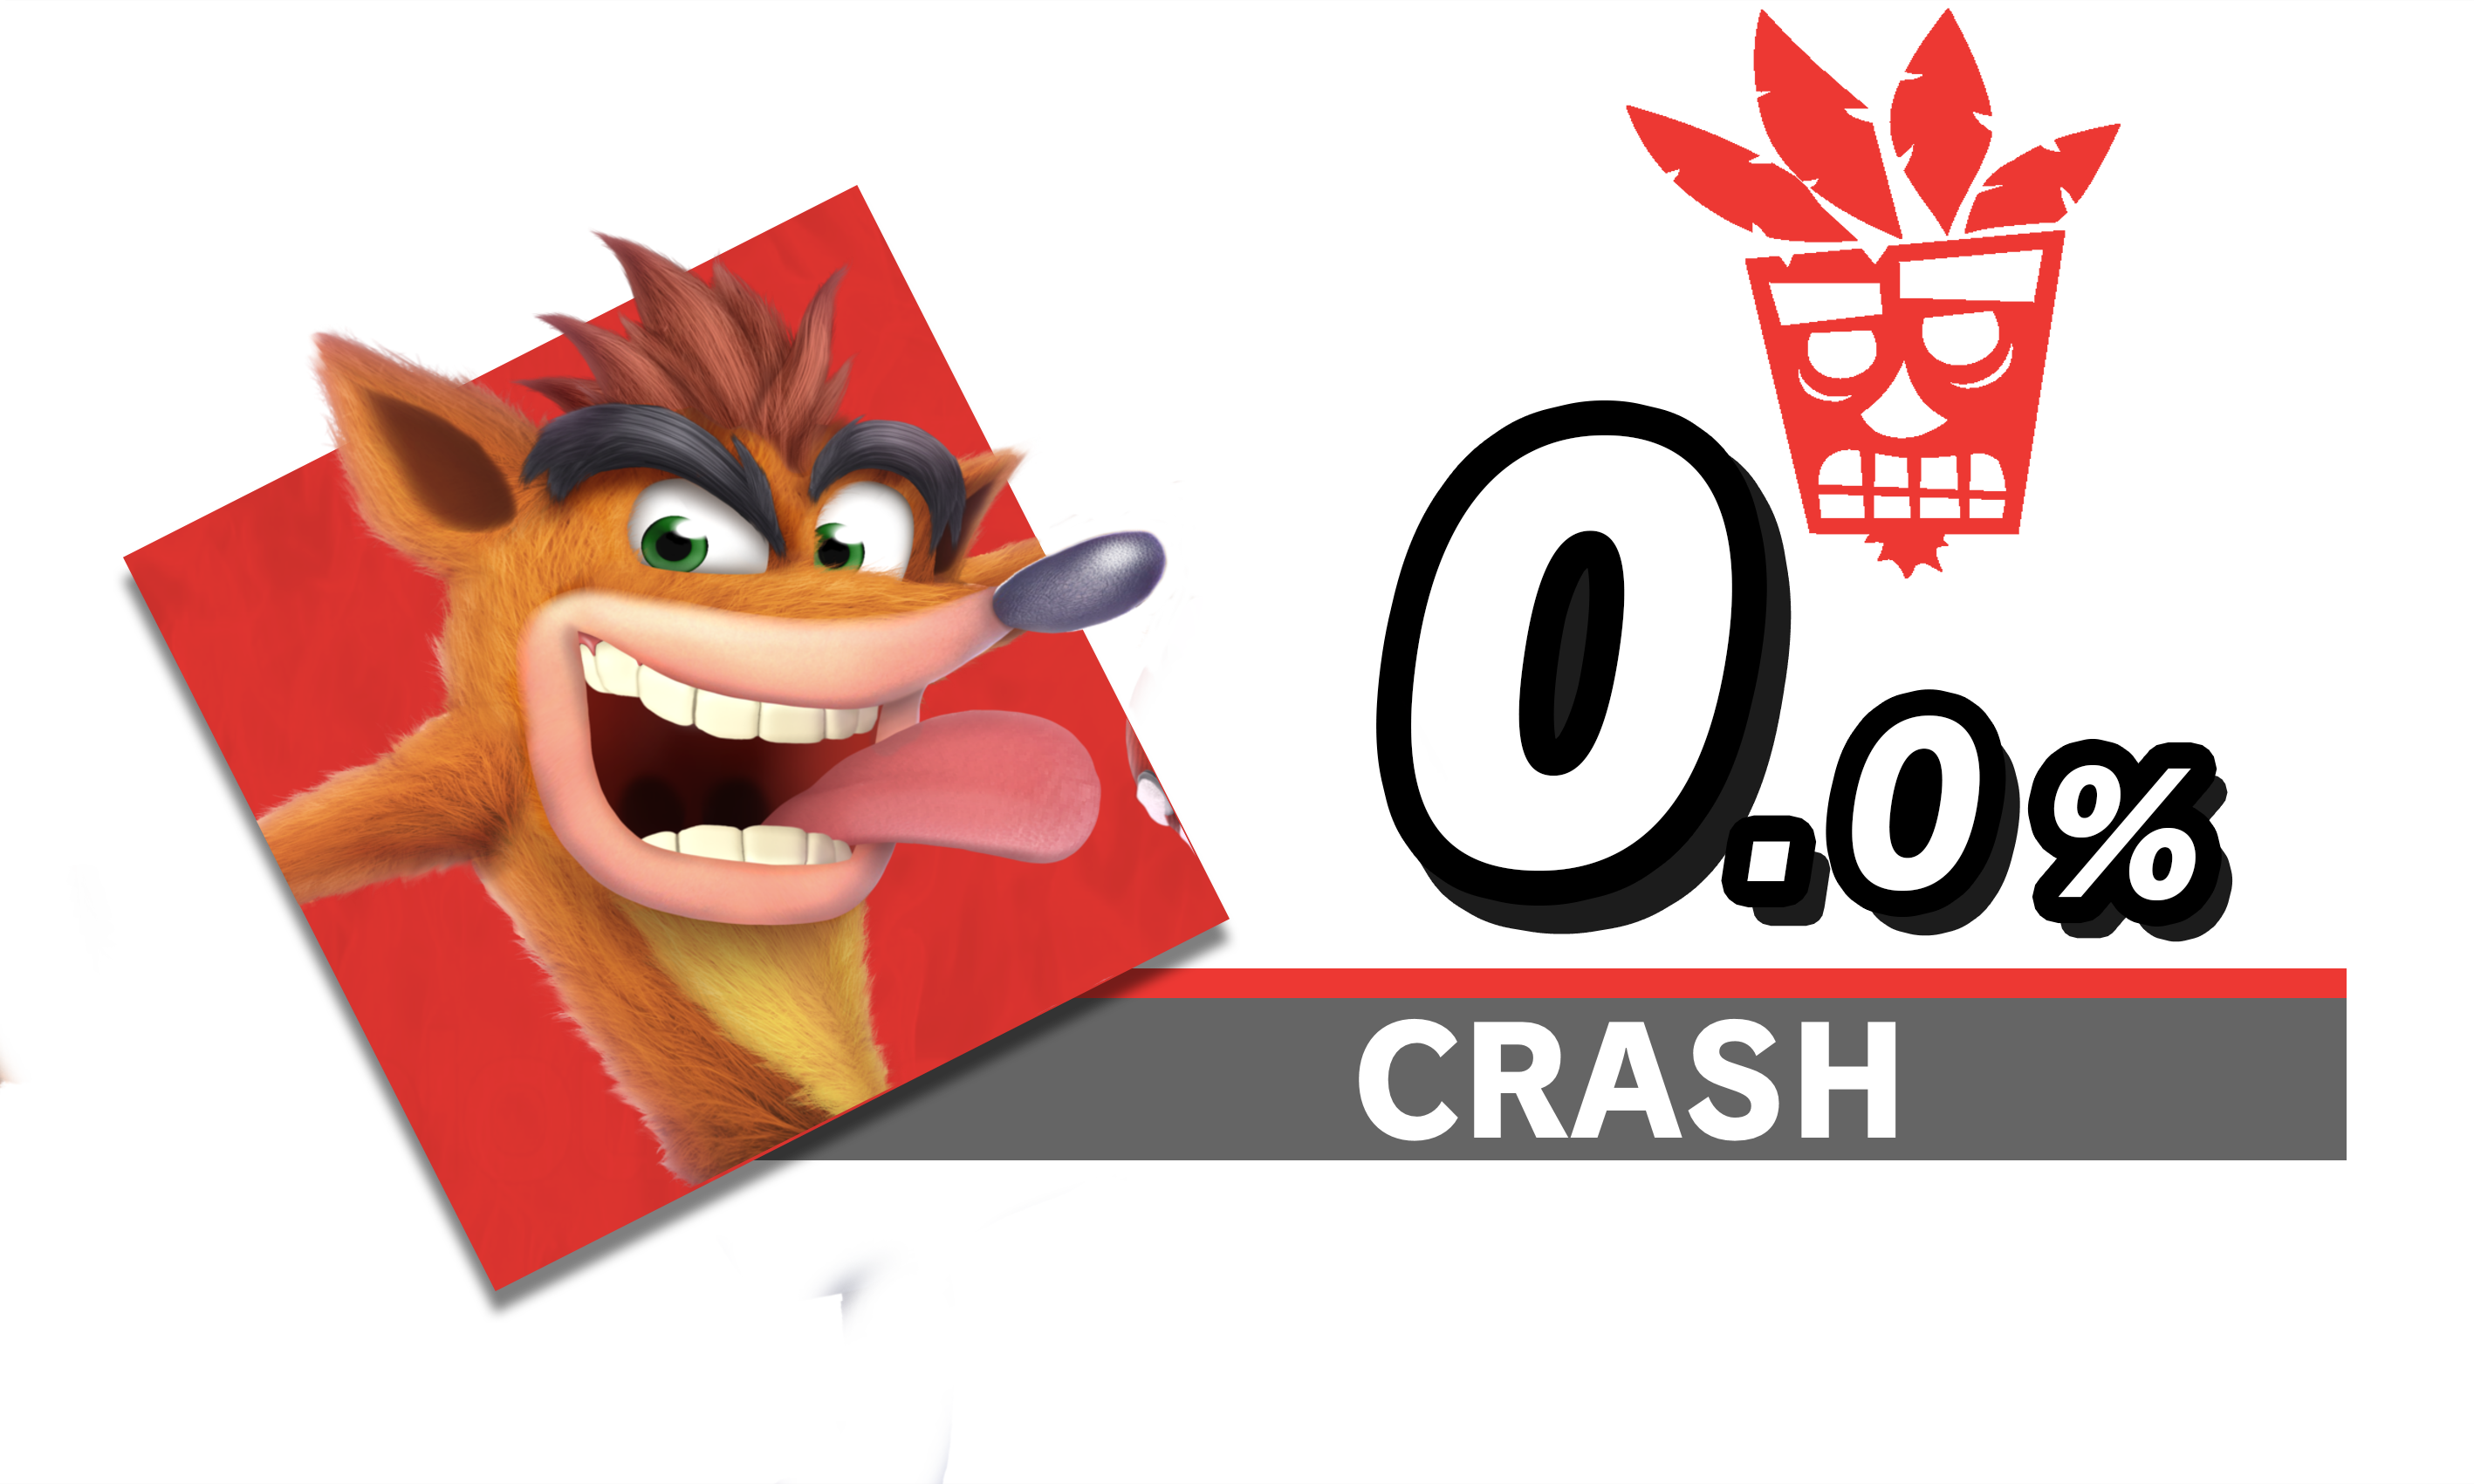 Smash Crash Redesign by mixa18 on DeviantArt